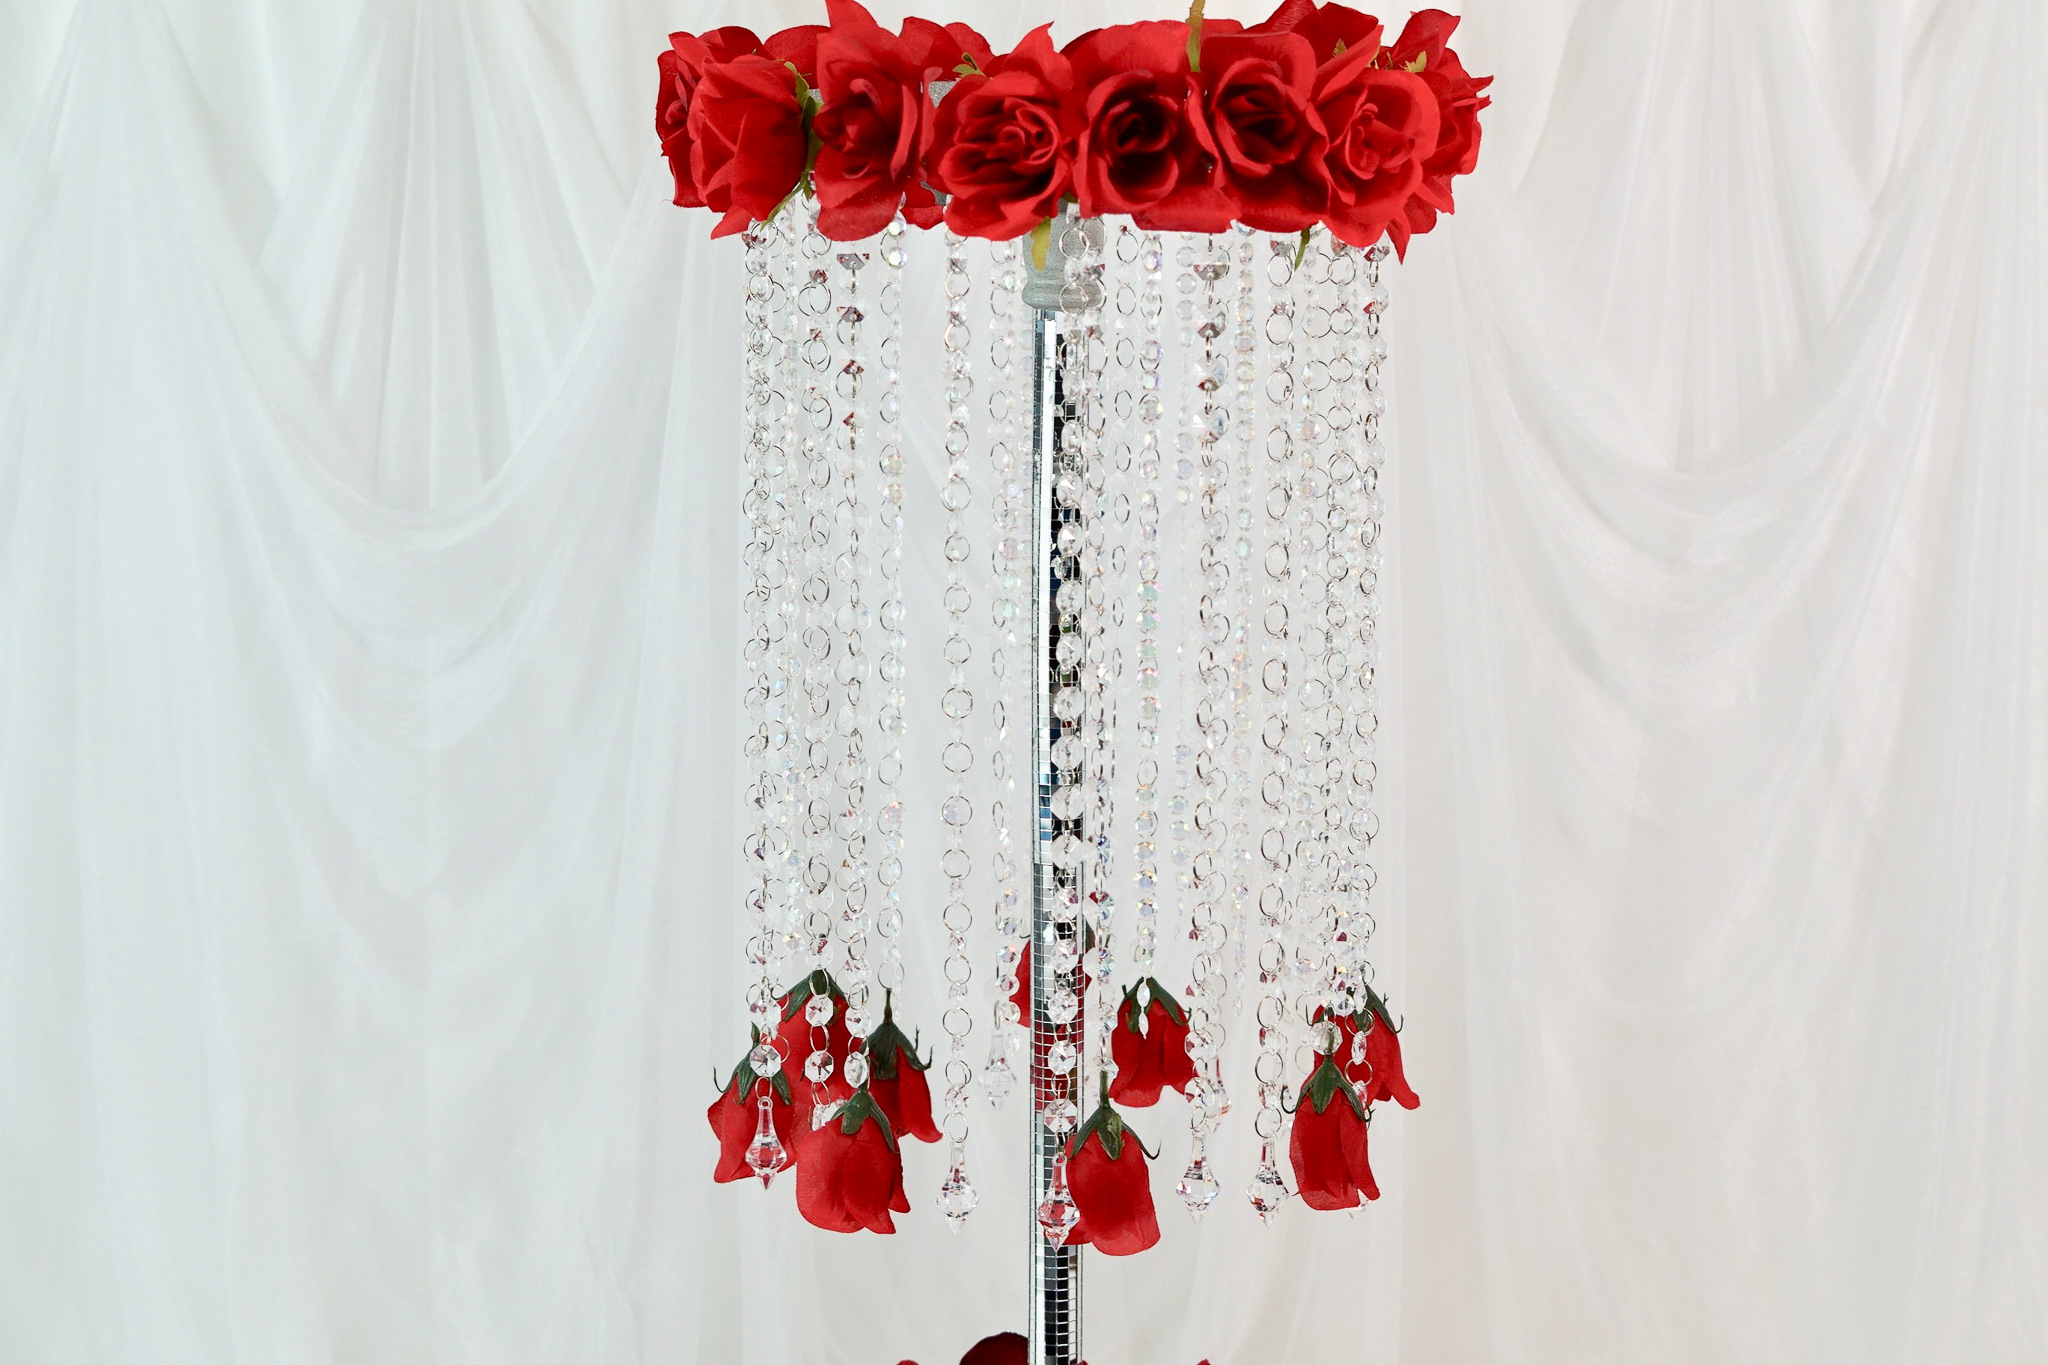 DIY Tall Rose Chandelier Wedding Centerpiece